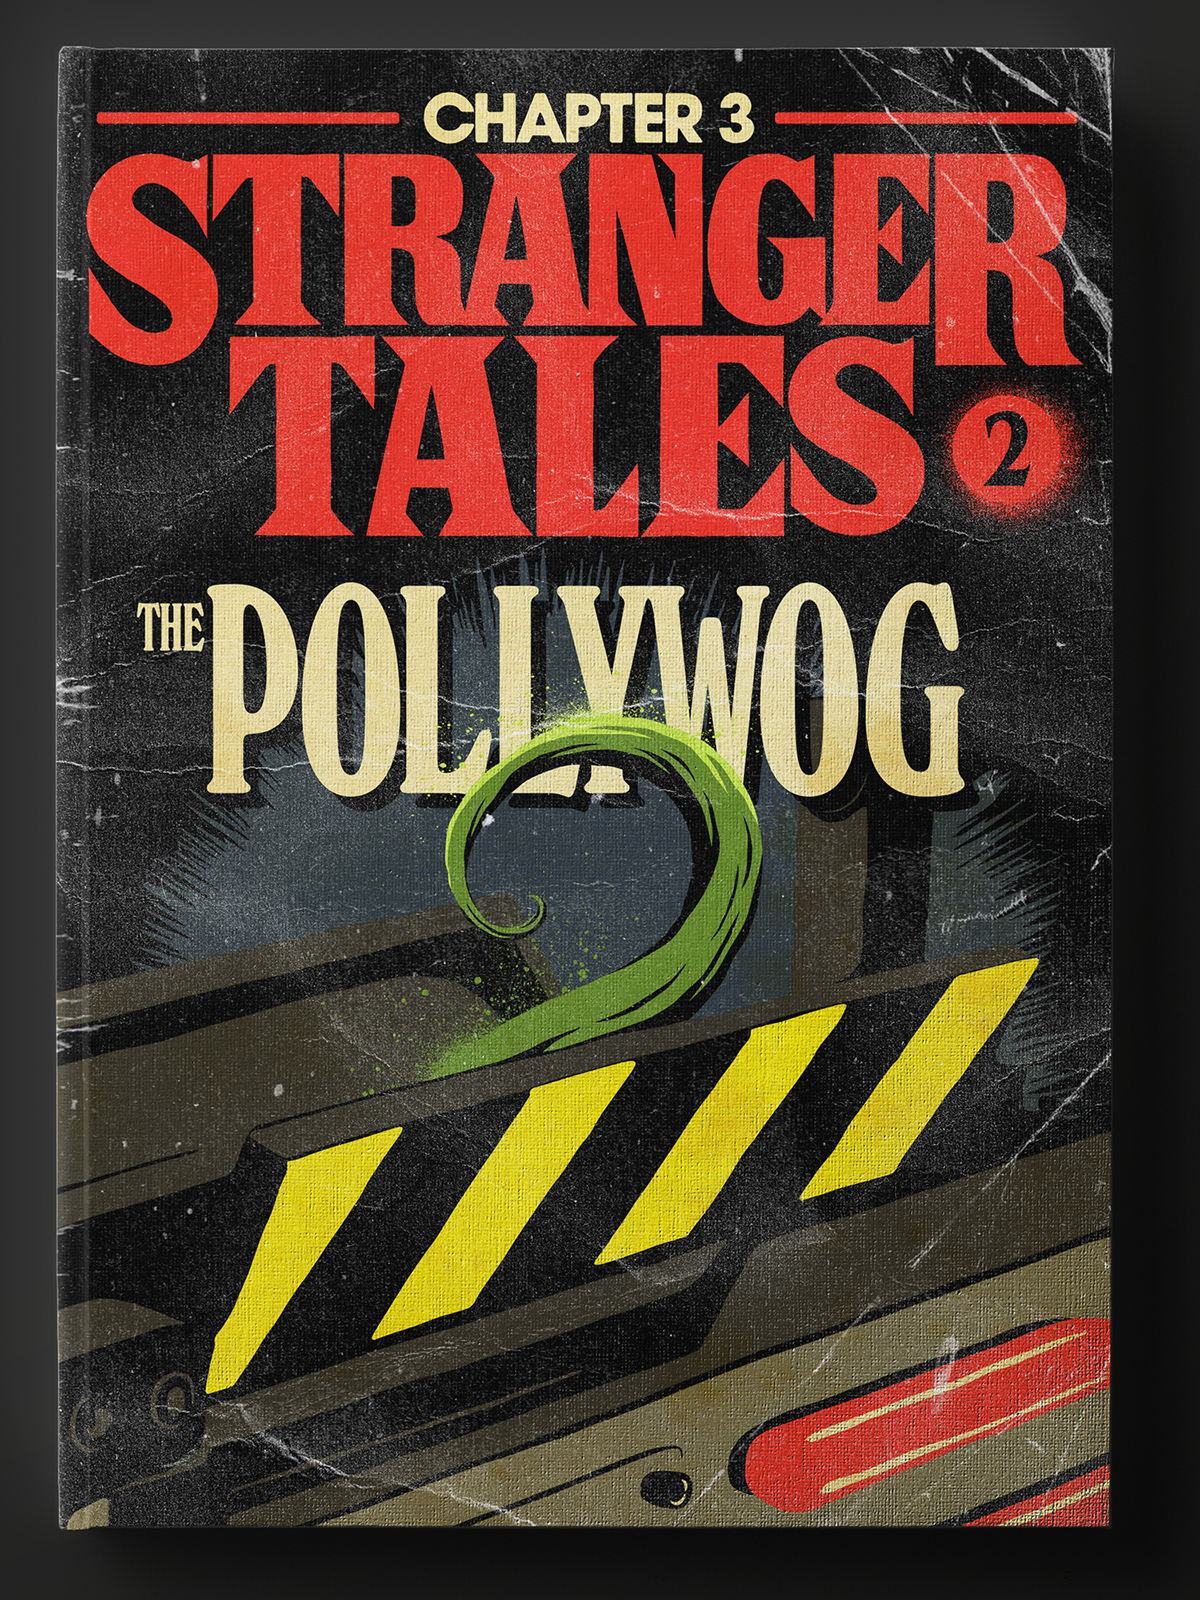 Stranger Things Netflix dario argento comic books Games Videogames atari vintage eerie